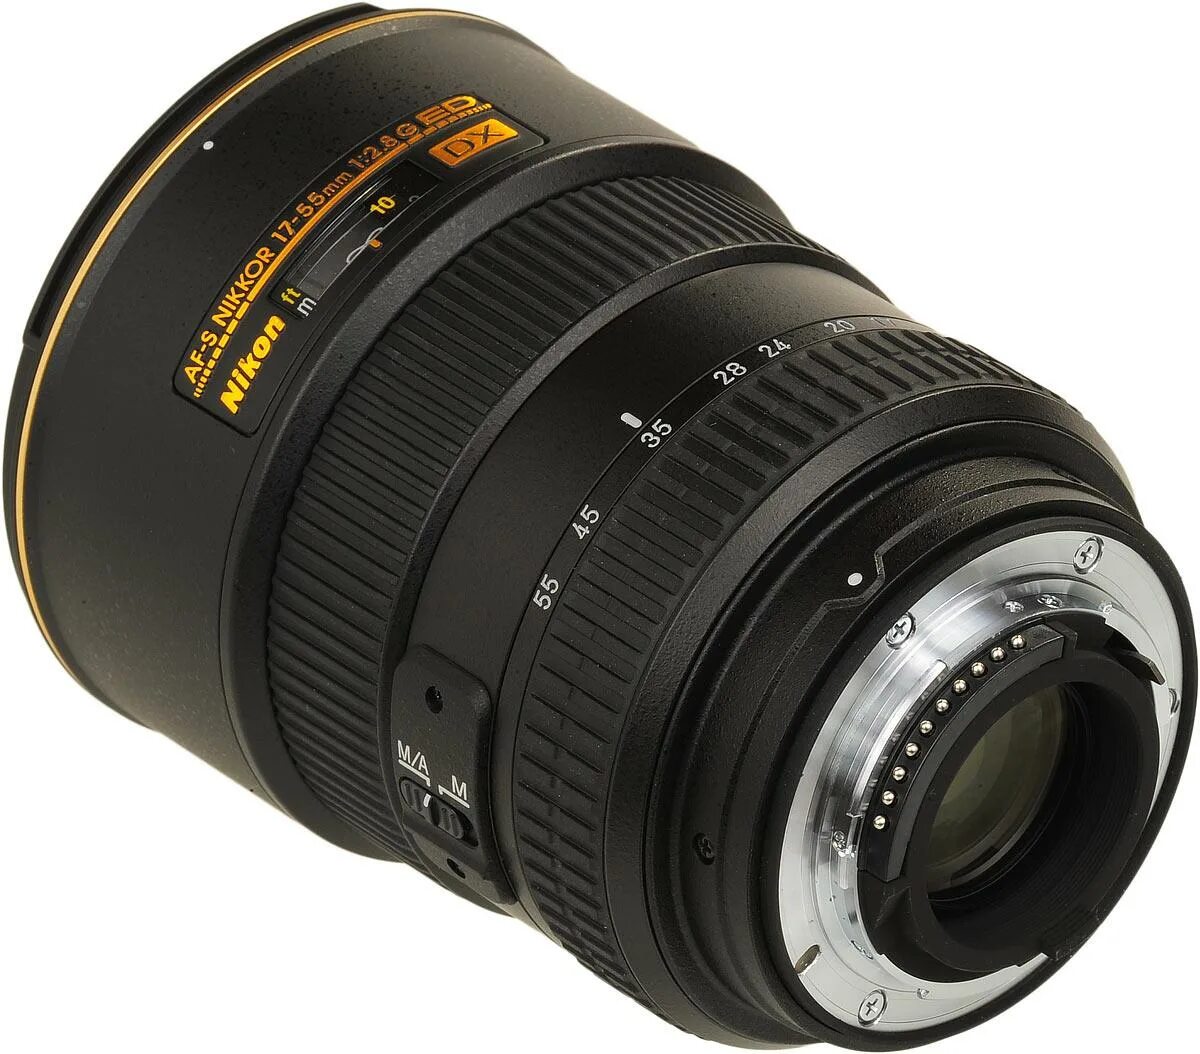 55 1 8. Af-s DX Nikkor 17-55mm f/2.8 g. Nikon 17-55mm f/2.8g if-ed af-s DX Nikkor. Nikon 17-55mm f/2.8.